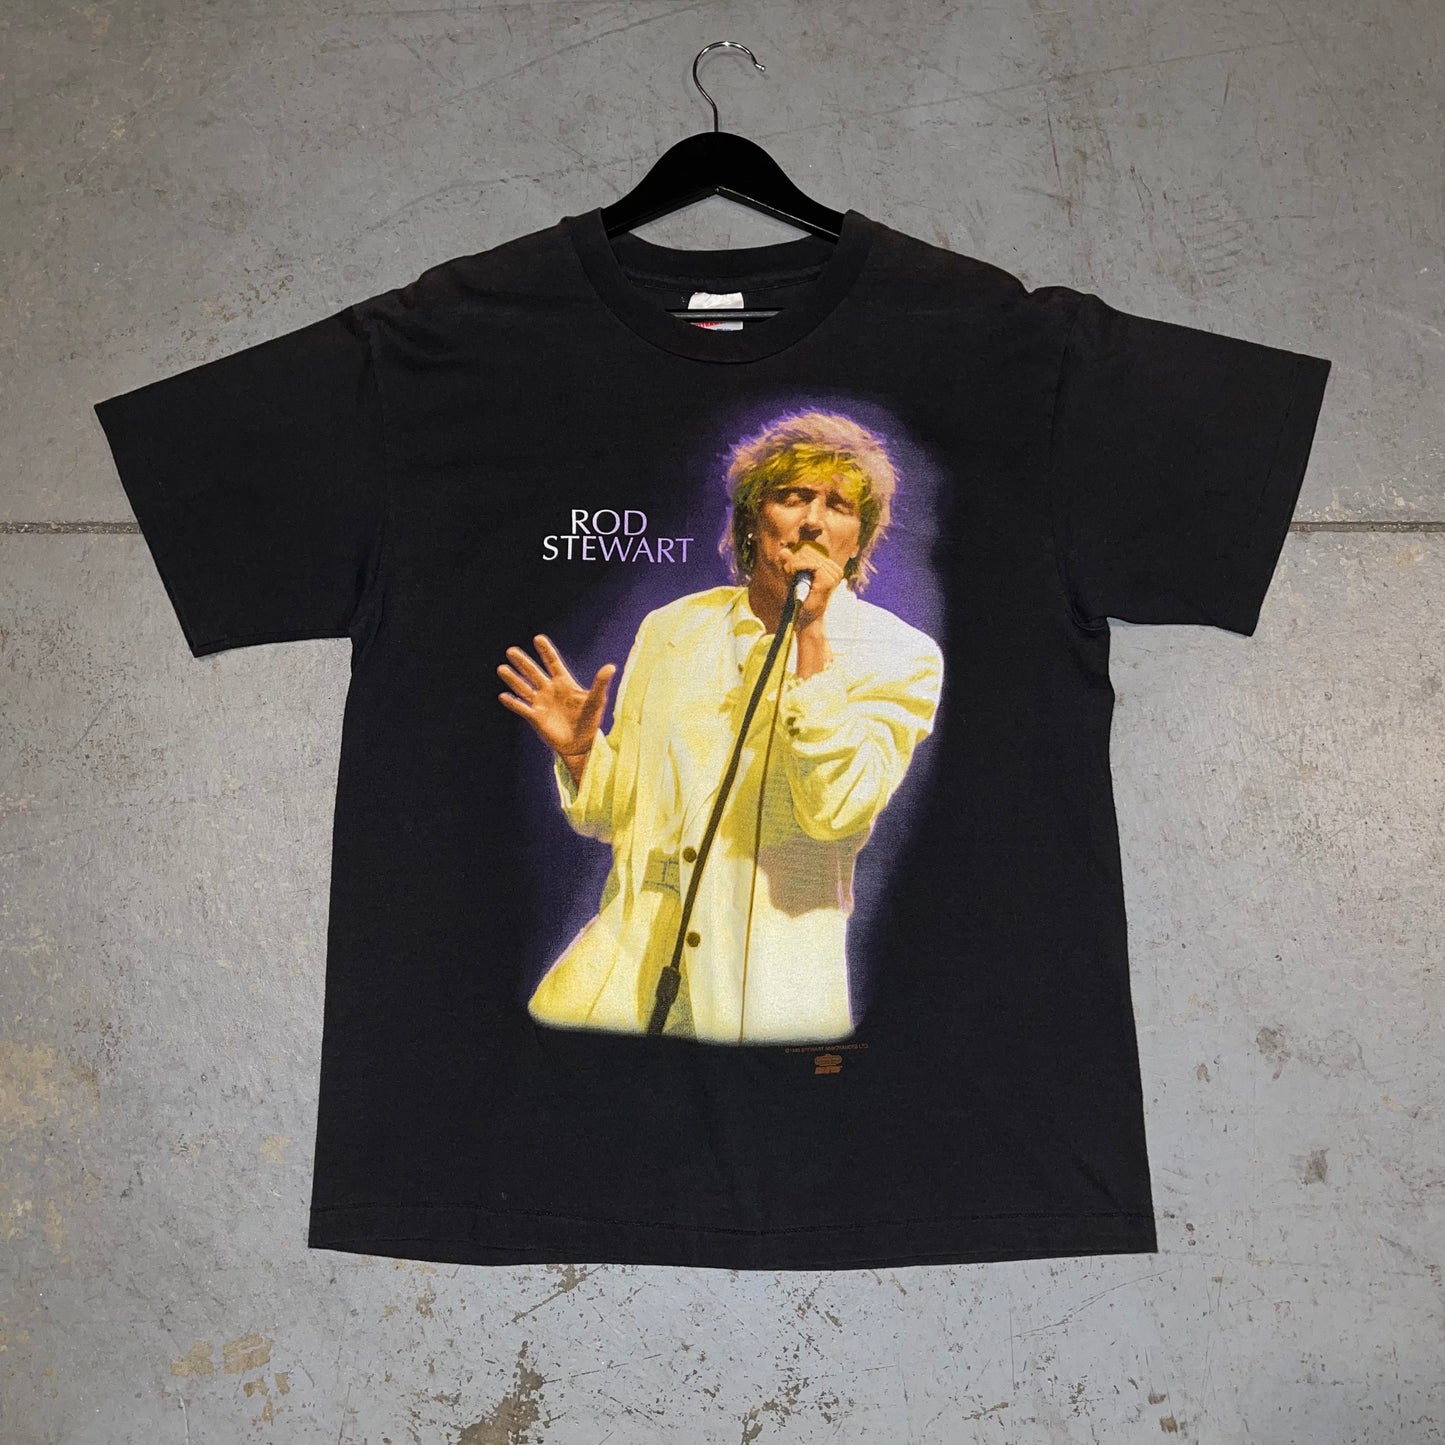 Vintage 1993 Rod Stewart A Night To Remember tour tshirt. Sz L